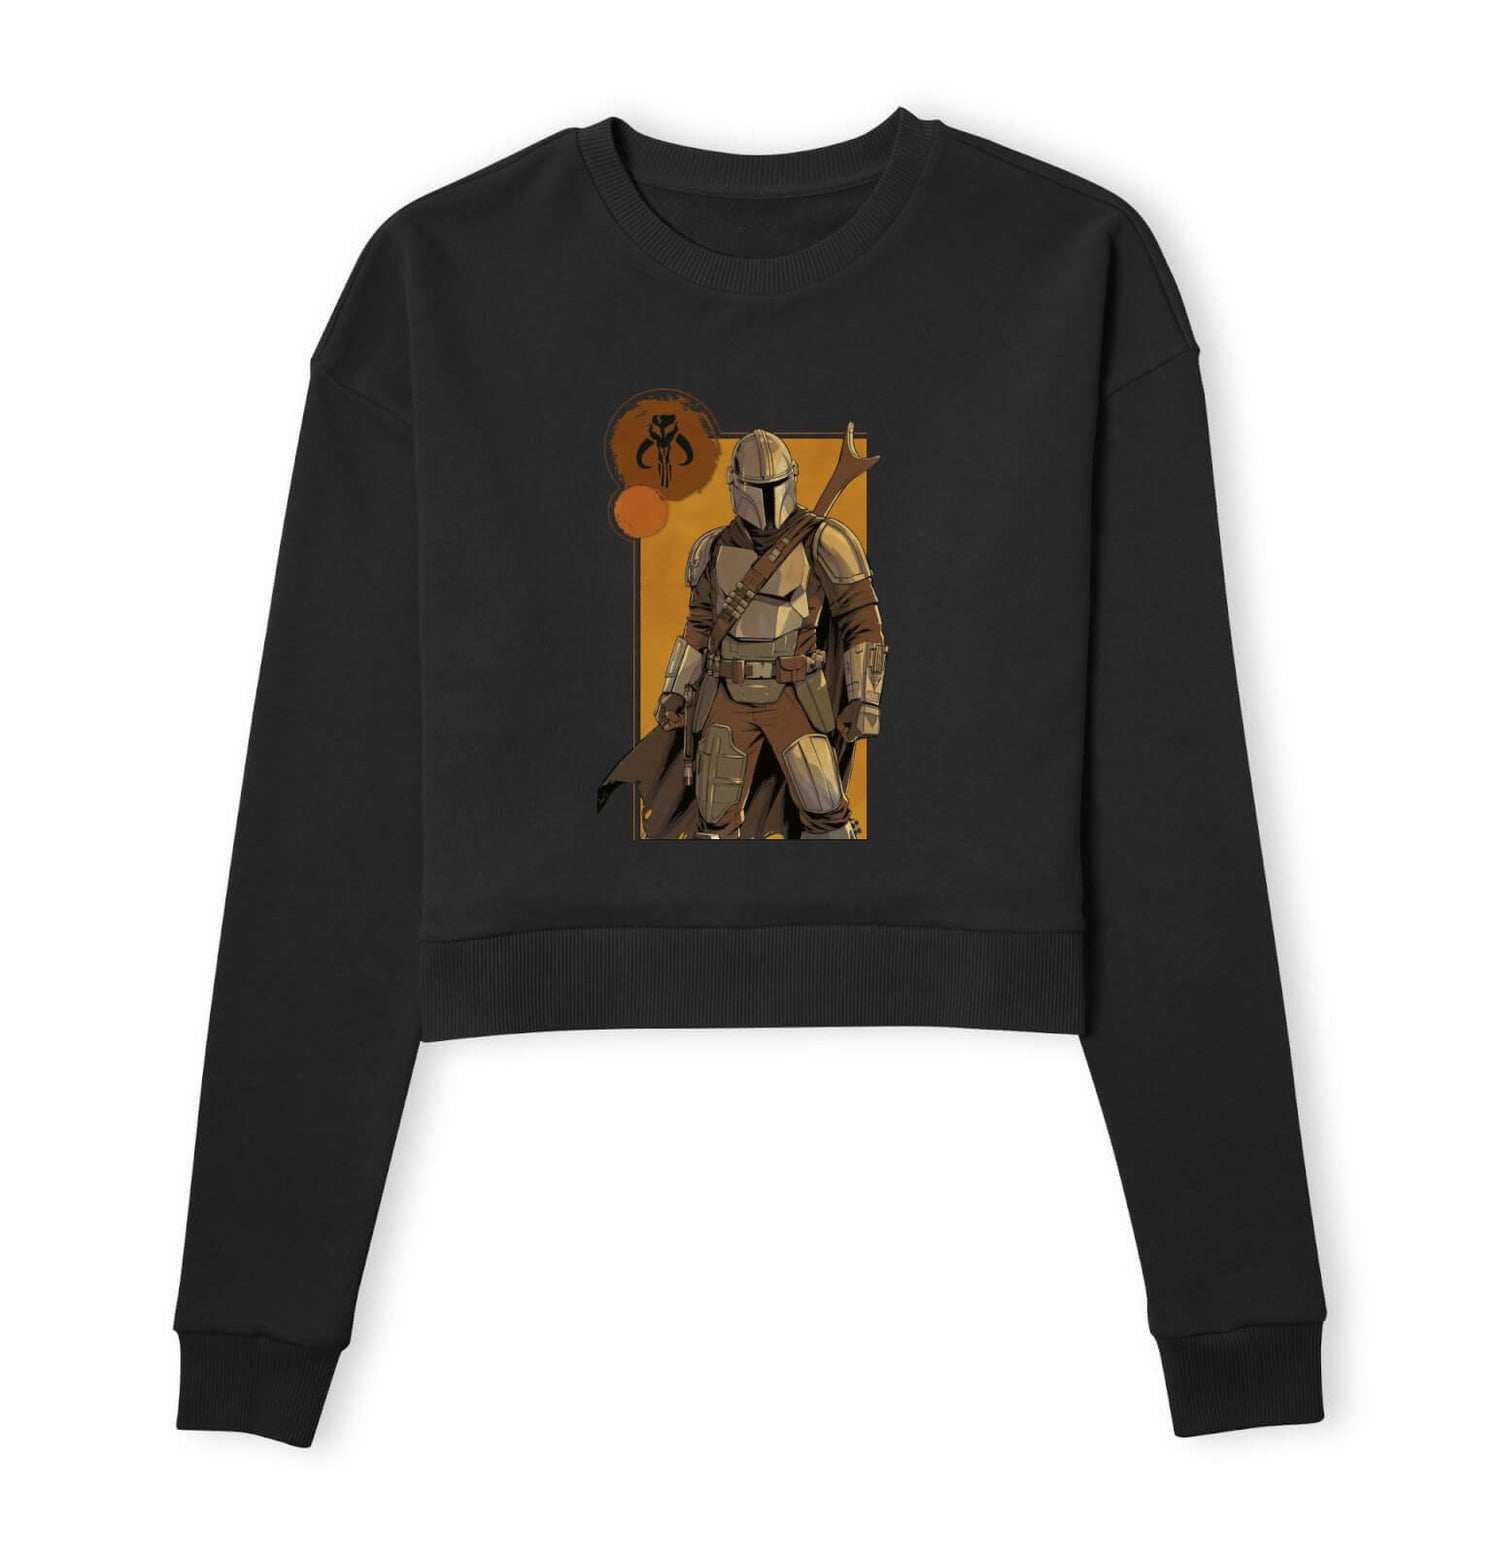 Star Wars The Mandalorian Composition Women's Cropped Sweatshirt - Black